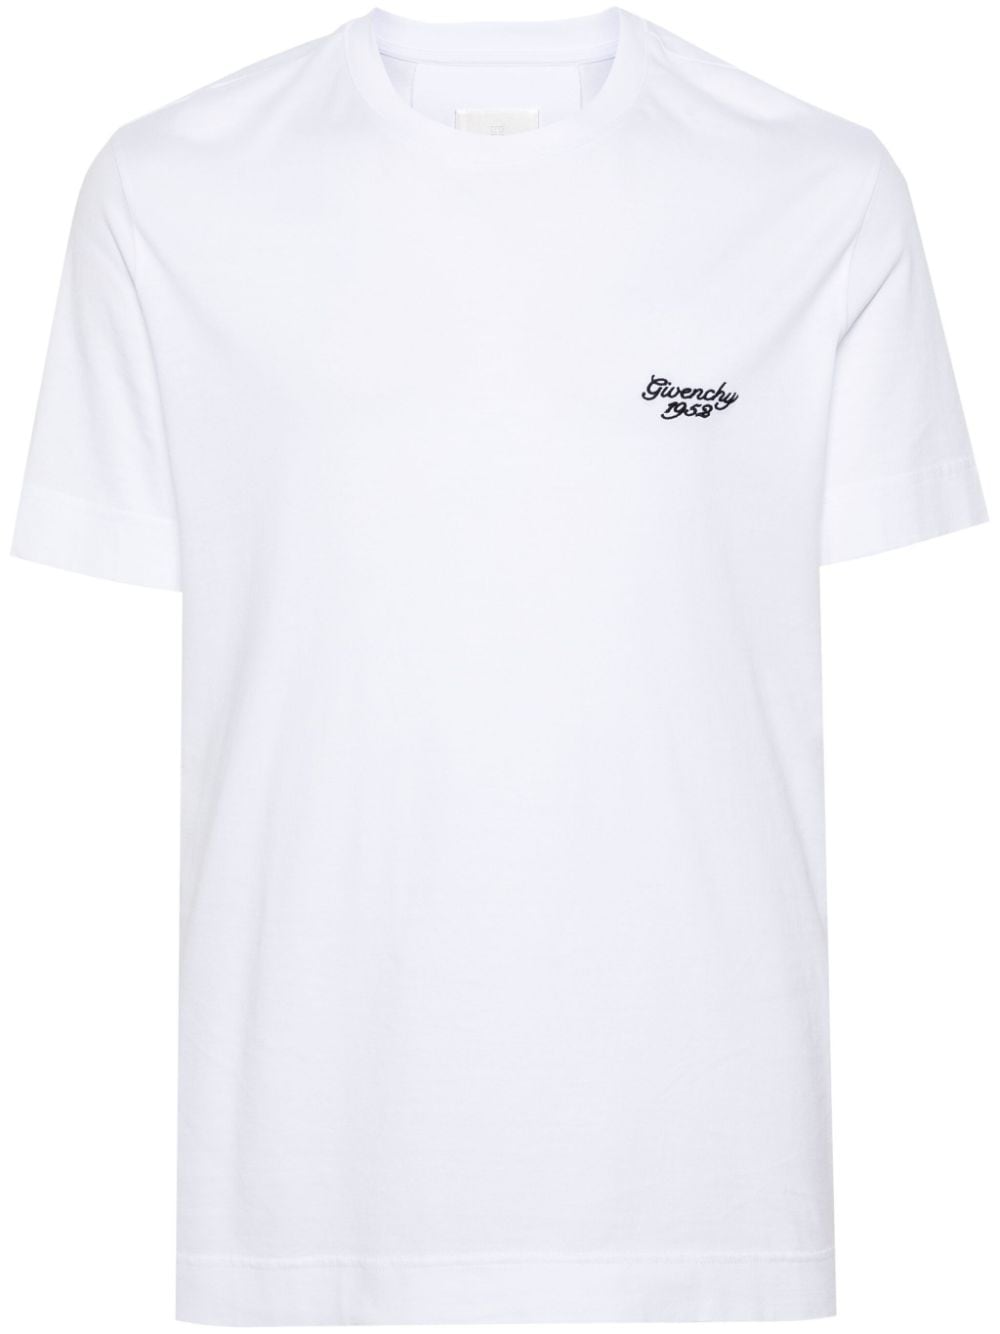 T-shirt bianca con logo frontale